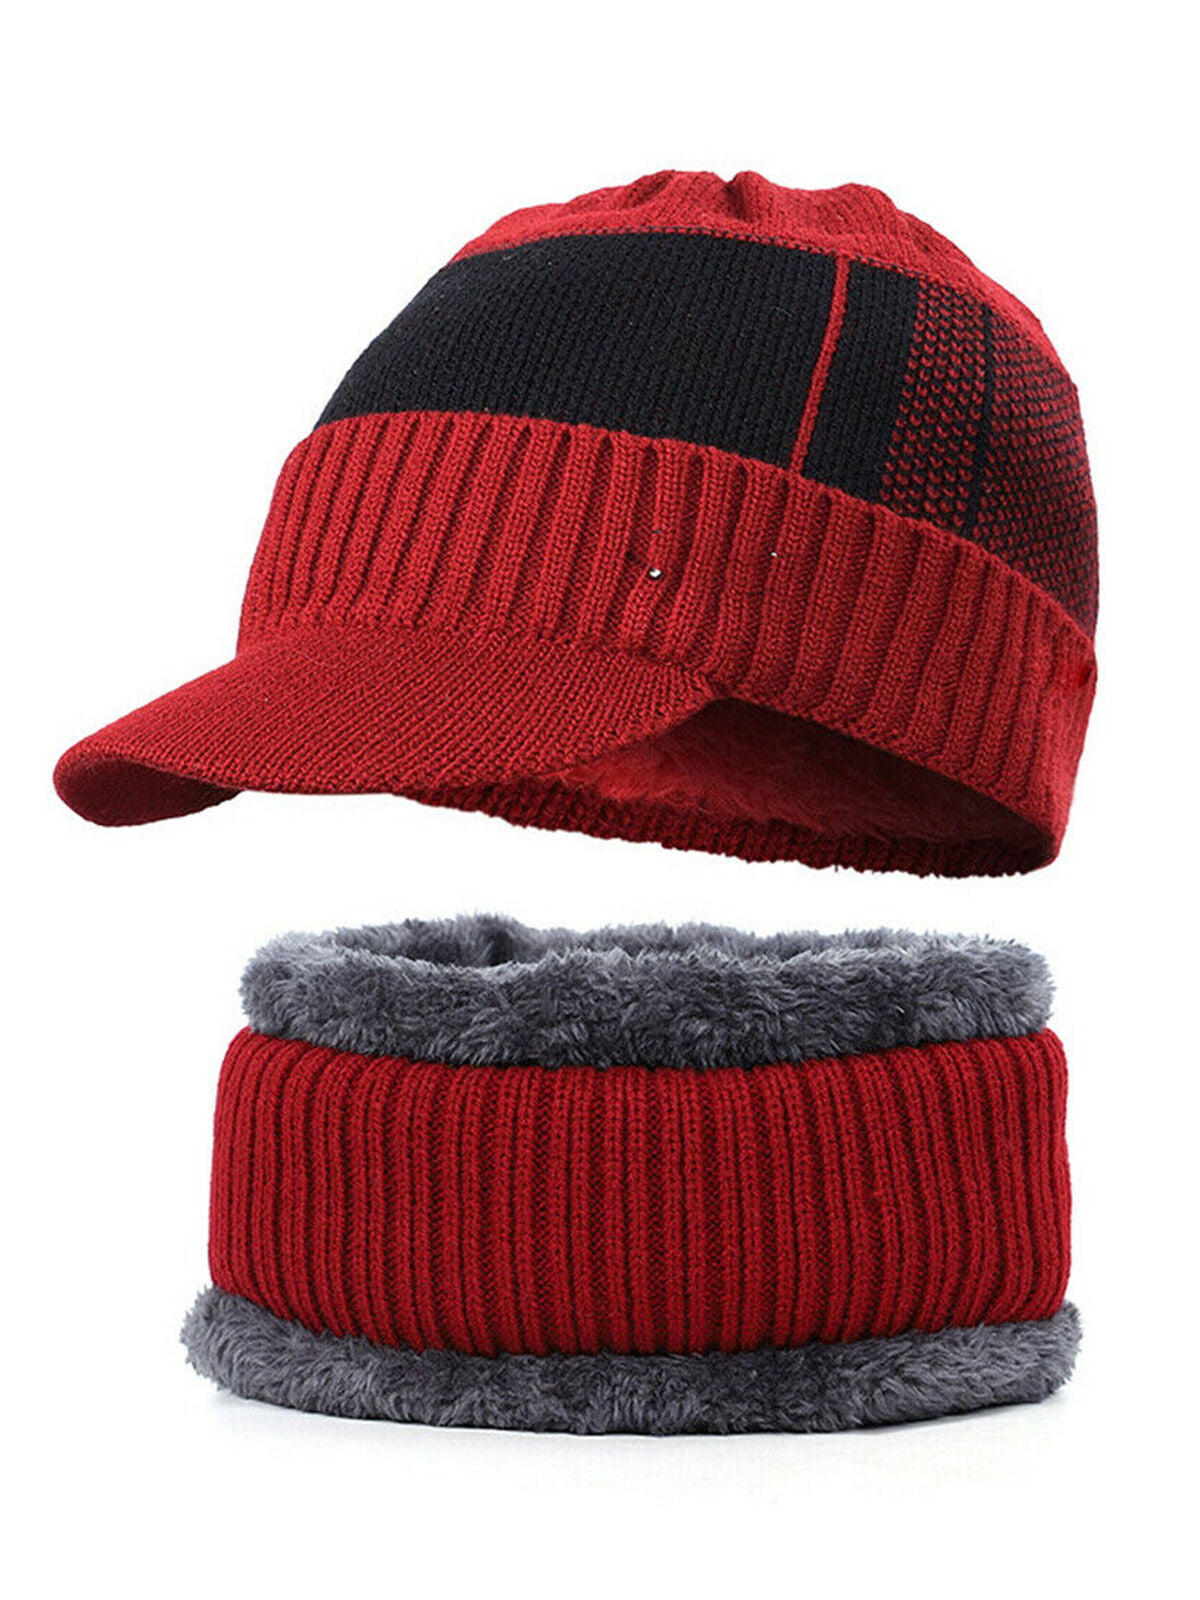 Luethbiezx Men's Winter Warm Hat Knit Visor Beanie Fleece Lined Beanie with Brim  Cap 